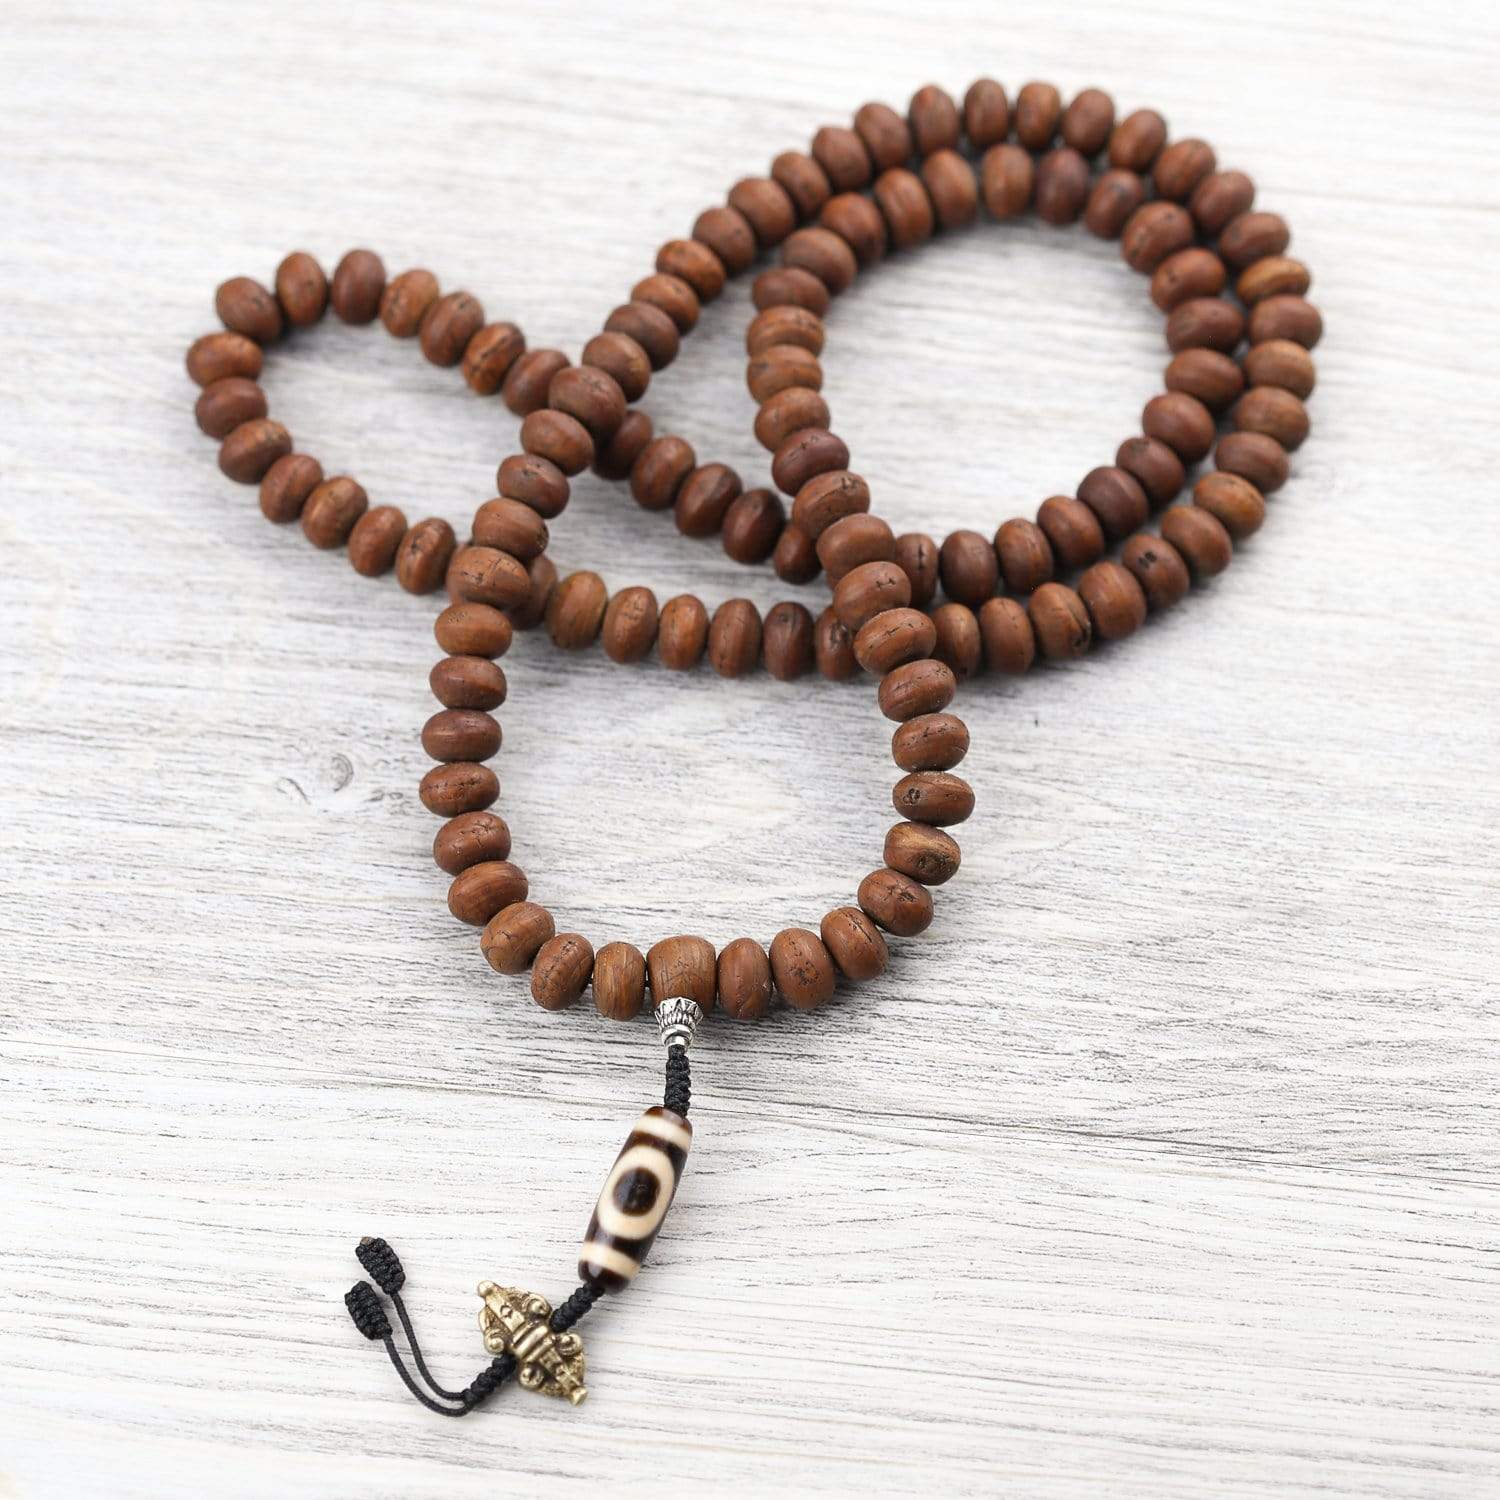 Bodhi Seed Mala,aged Bodhi Seeds, Buddhist Beads, Hand String Necklace,  Tibetan Prayer,hindu Mantra Chanting ,meditation Tools,monk Bracelet 